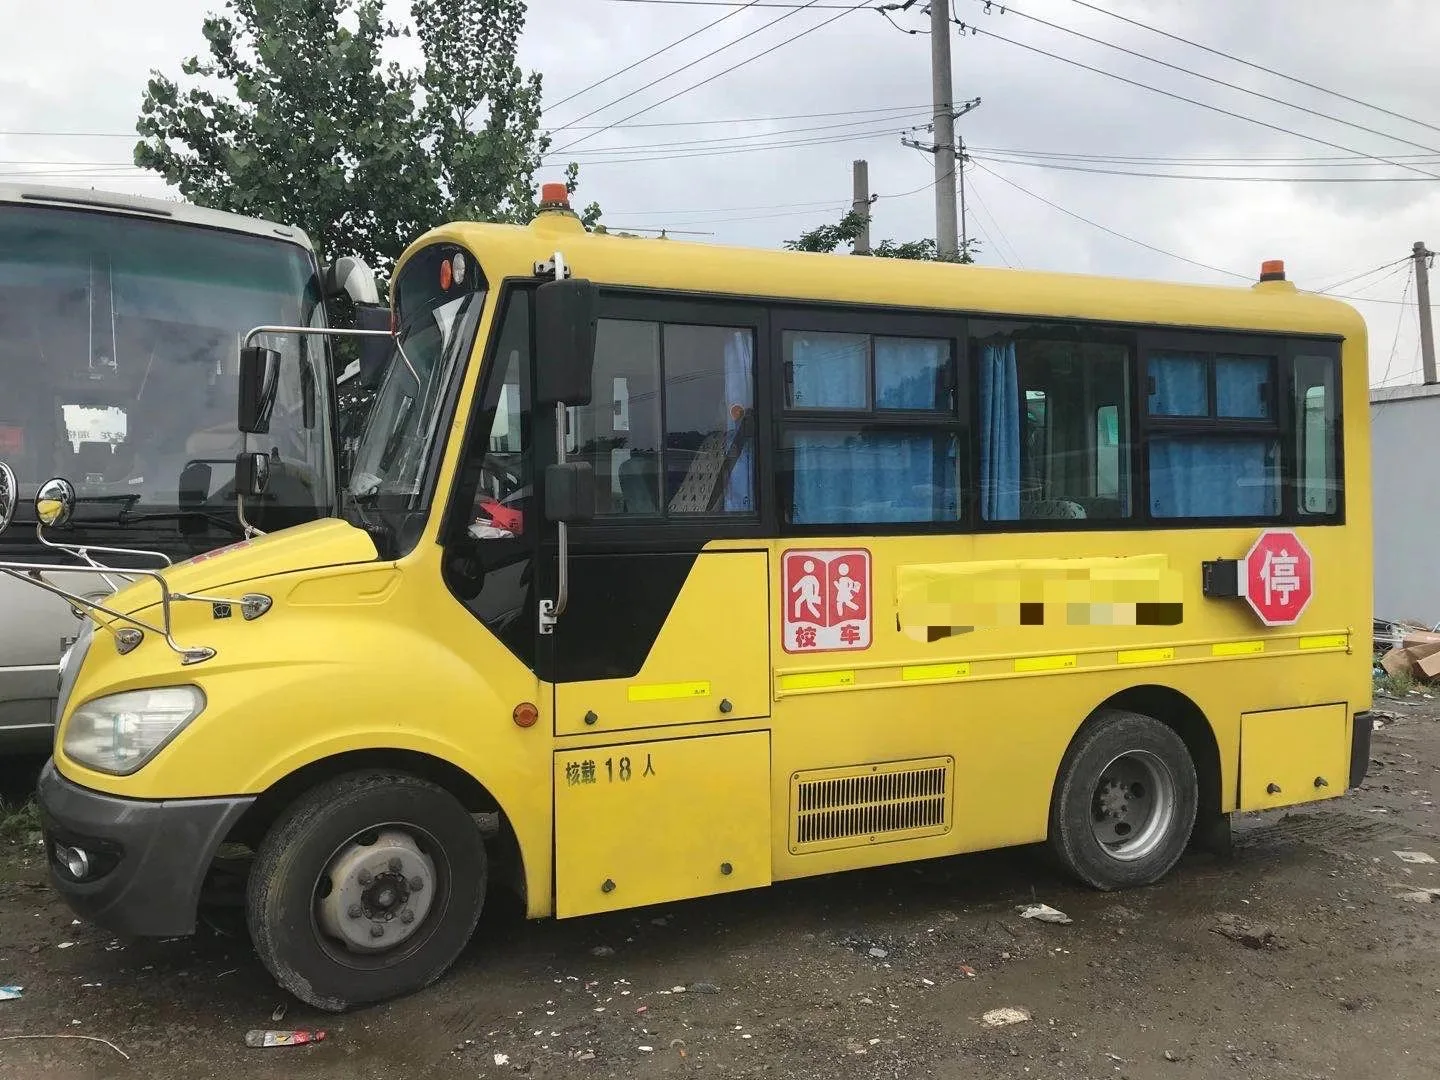 Dijual Cina Yutong 17 Kursi Bekas Kindercarten Bus Sekolah Harga Murah Buy China Yutong 17 Kursi Digunakan Kindercarten Bus Sekolah Harga Murah Untuk Dijual Kualitas Tinggi 2017 Yutong Digunakan Bus Sekolah 16